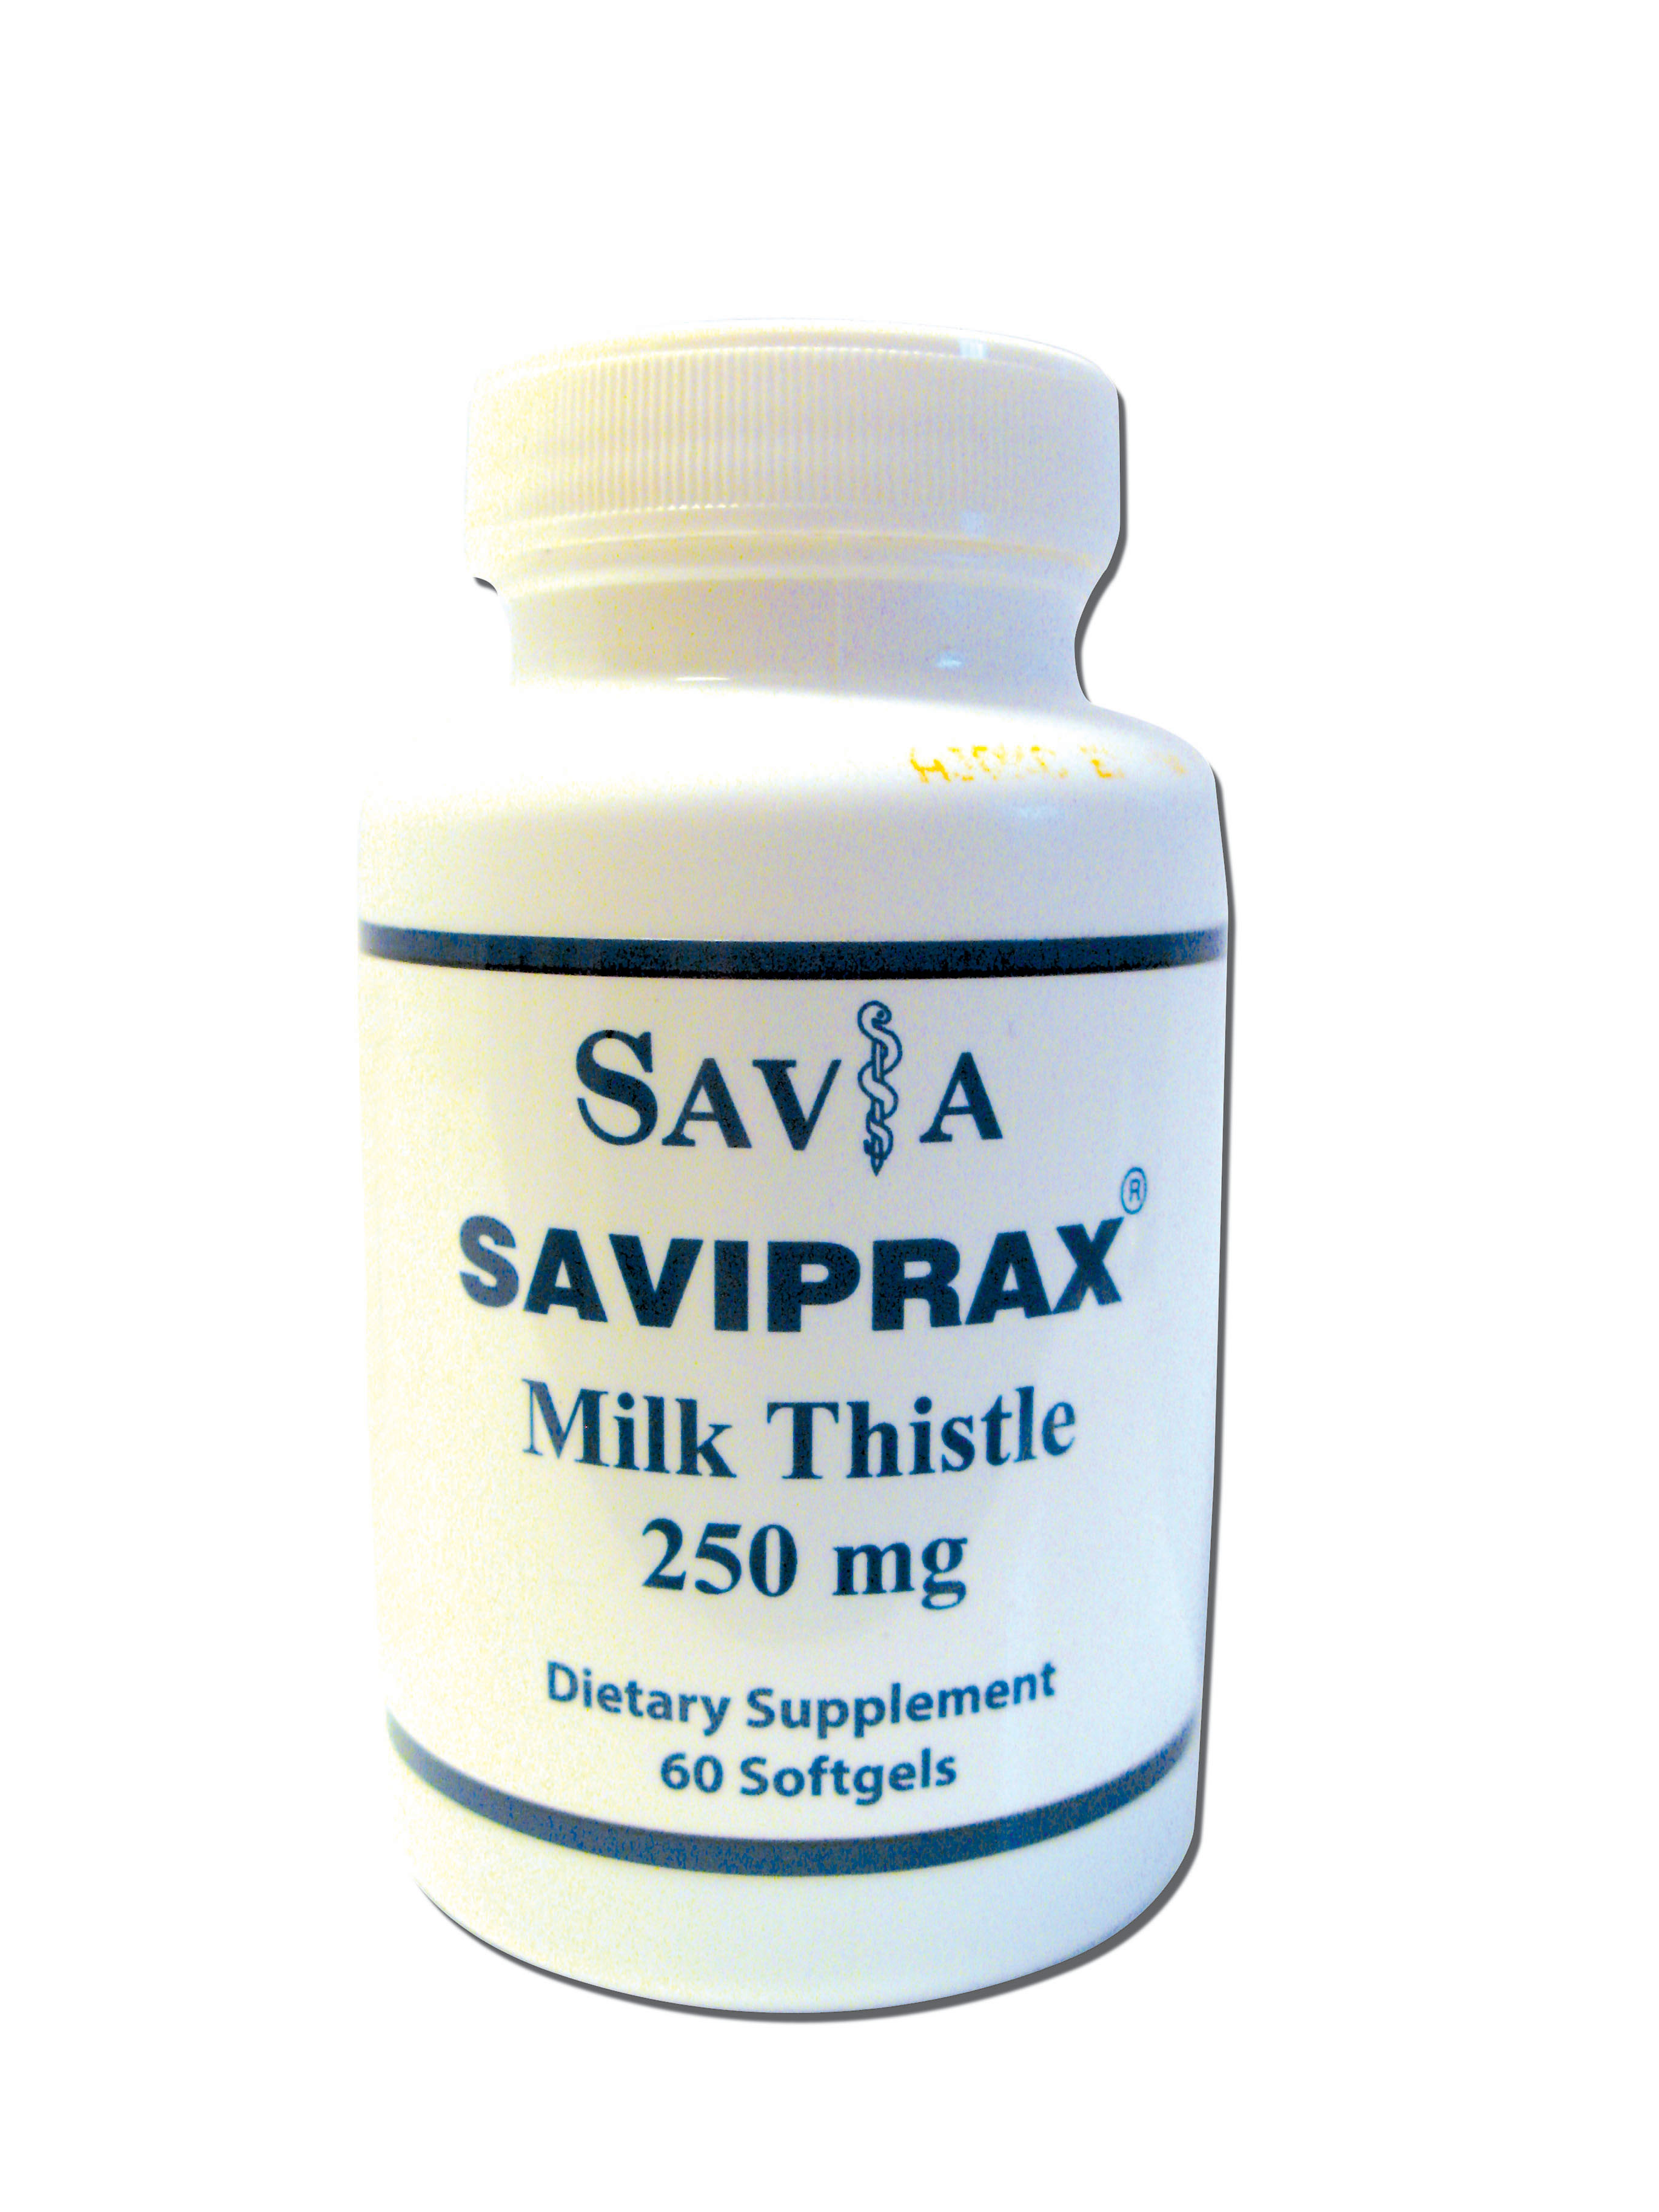 Saviprax milk thirstle